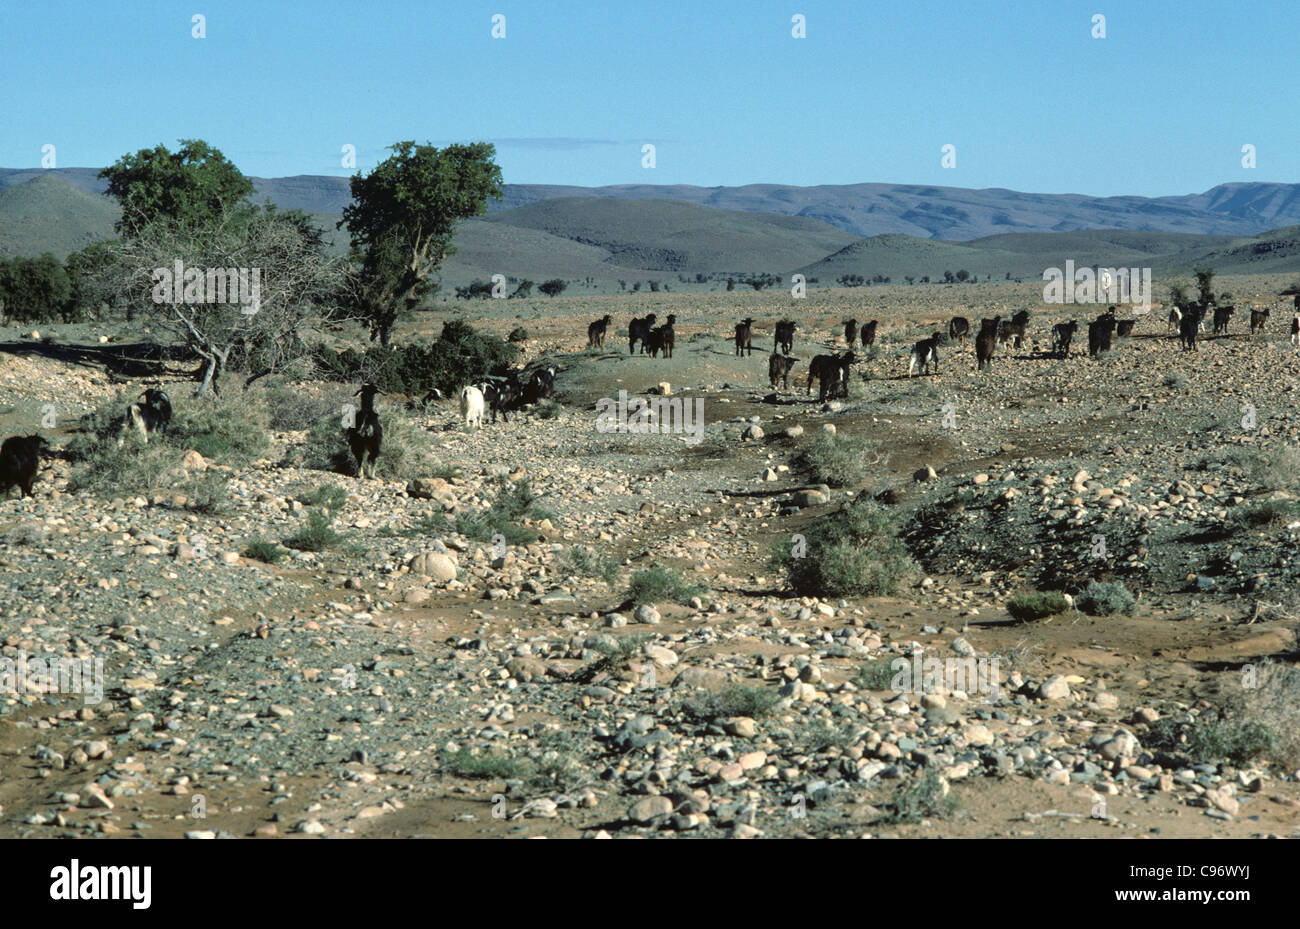 Flock of tree-climbing goats in pre-Sahara semi-desert, Morocco Stock Photo